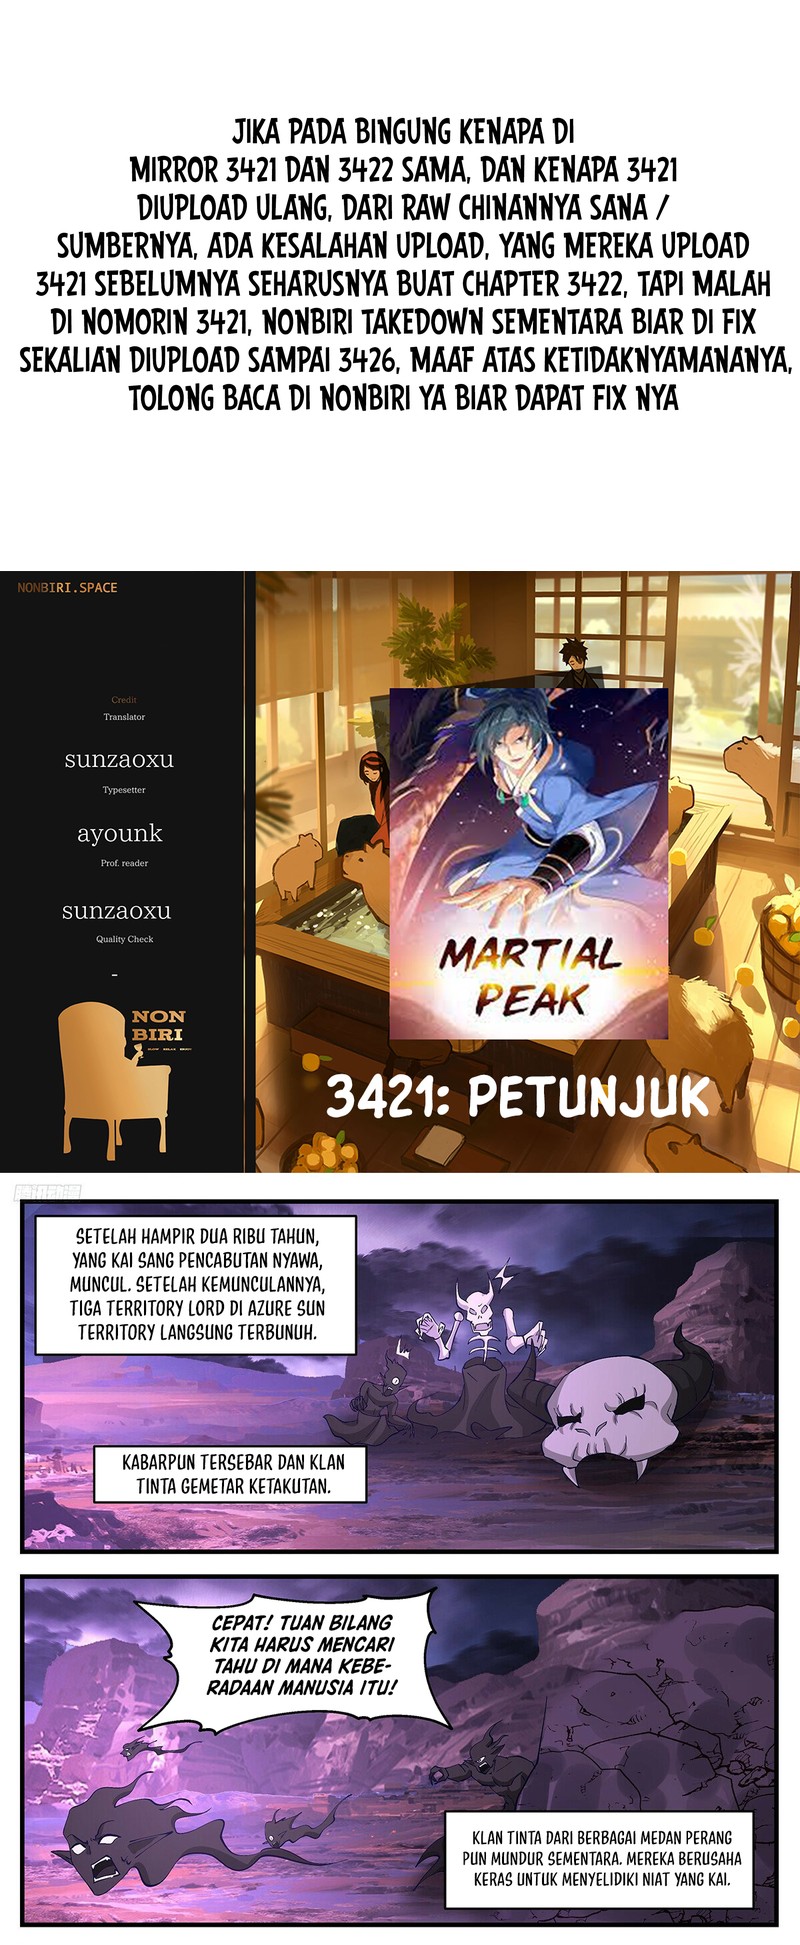 Martial Peak Chapter 3422